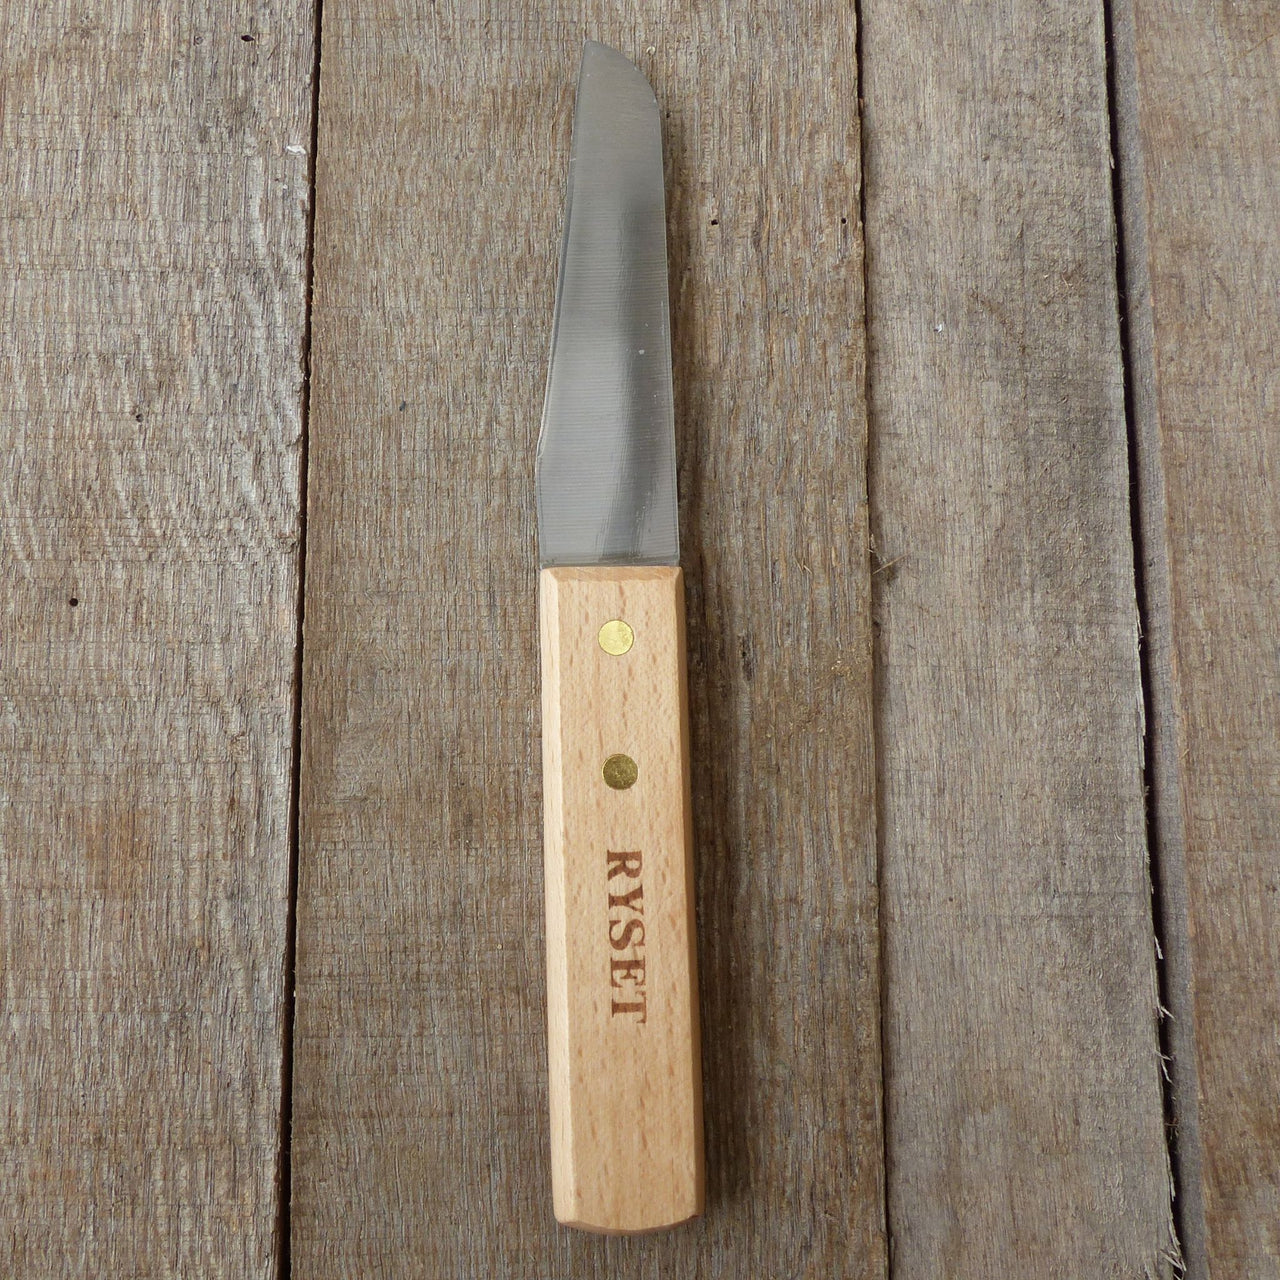 Microgreens Knife